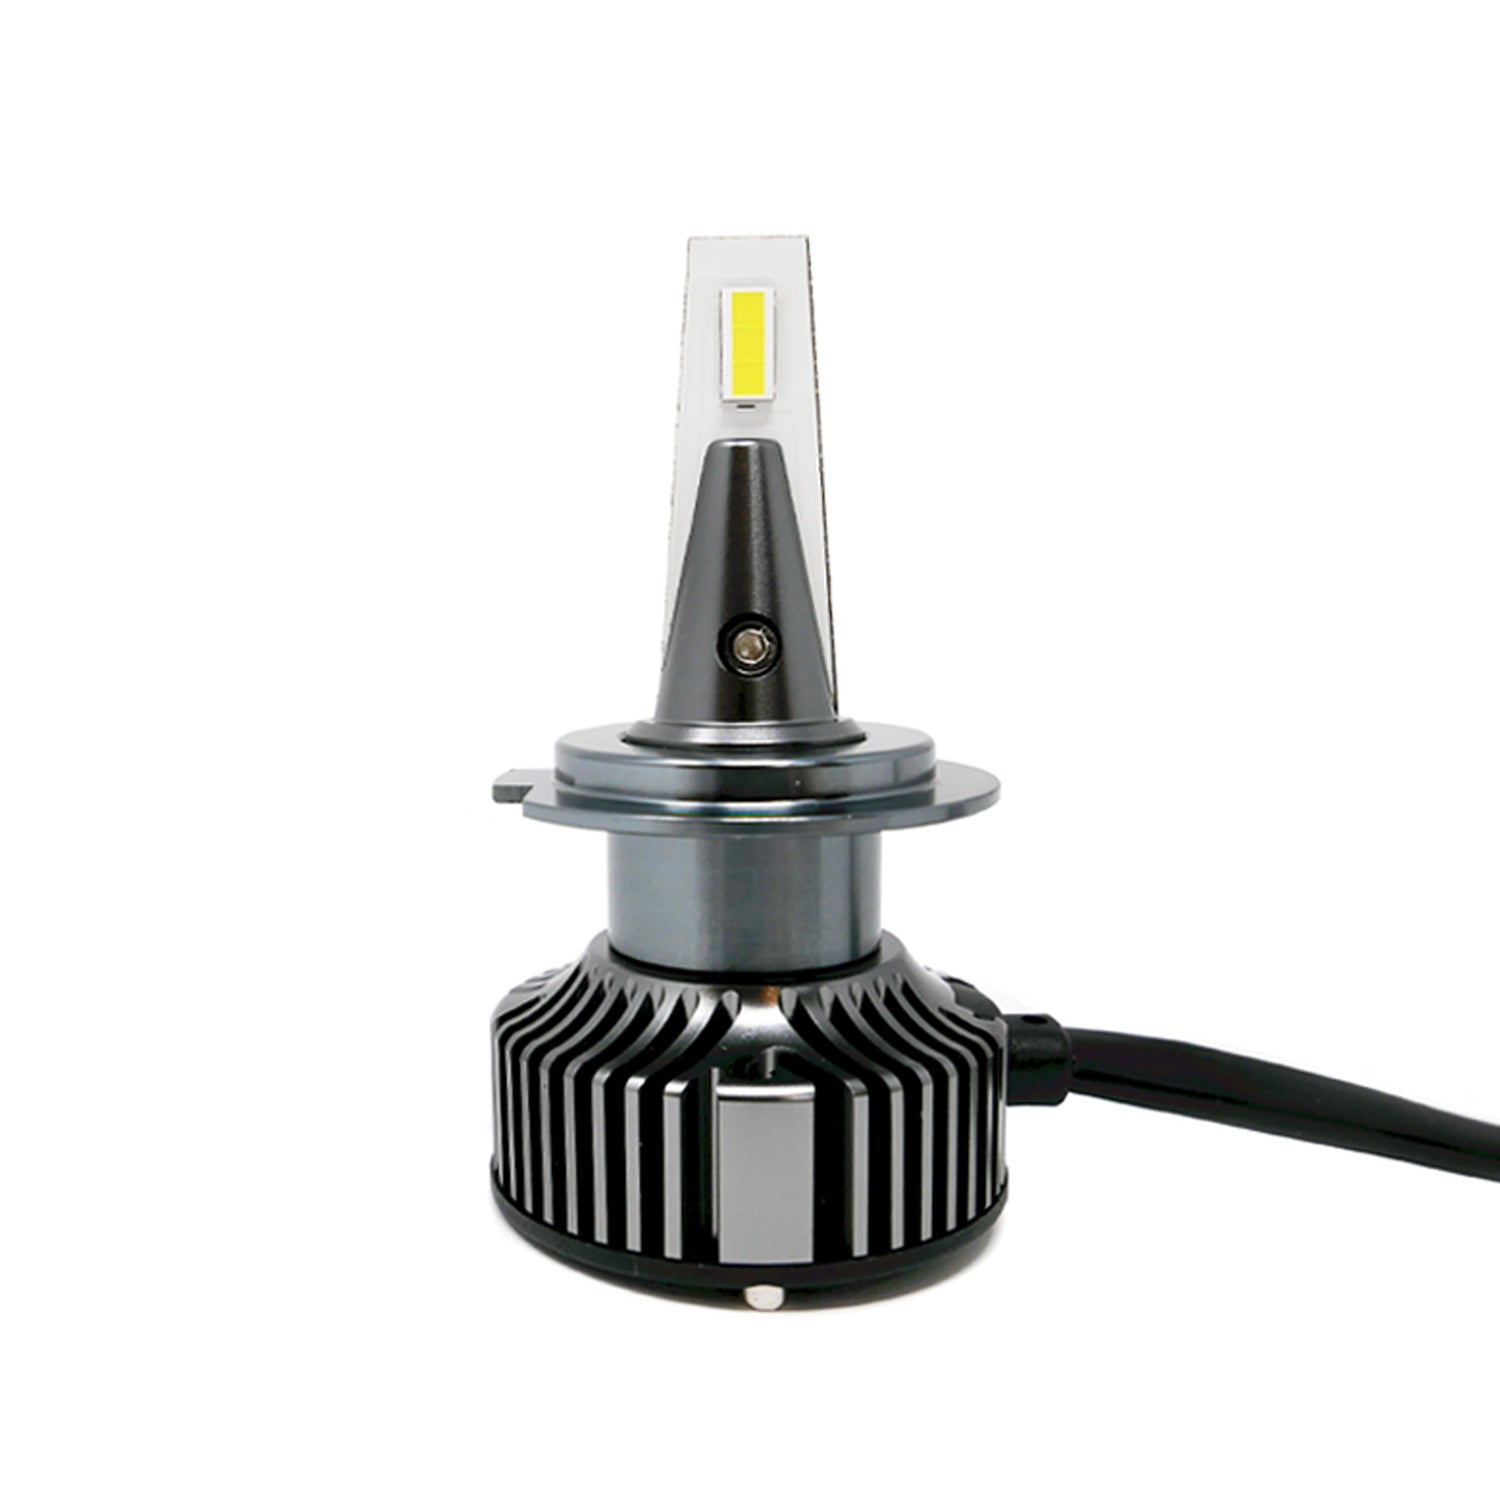 OSRAM LEDriving HL (Next Generation) LED H7, Twin Car Headlight Bulbs